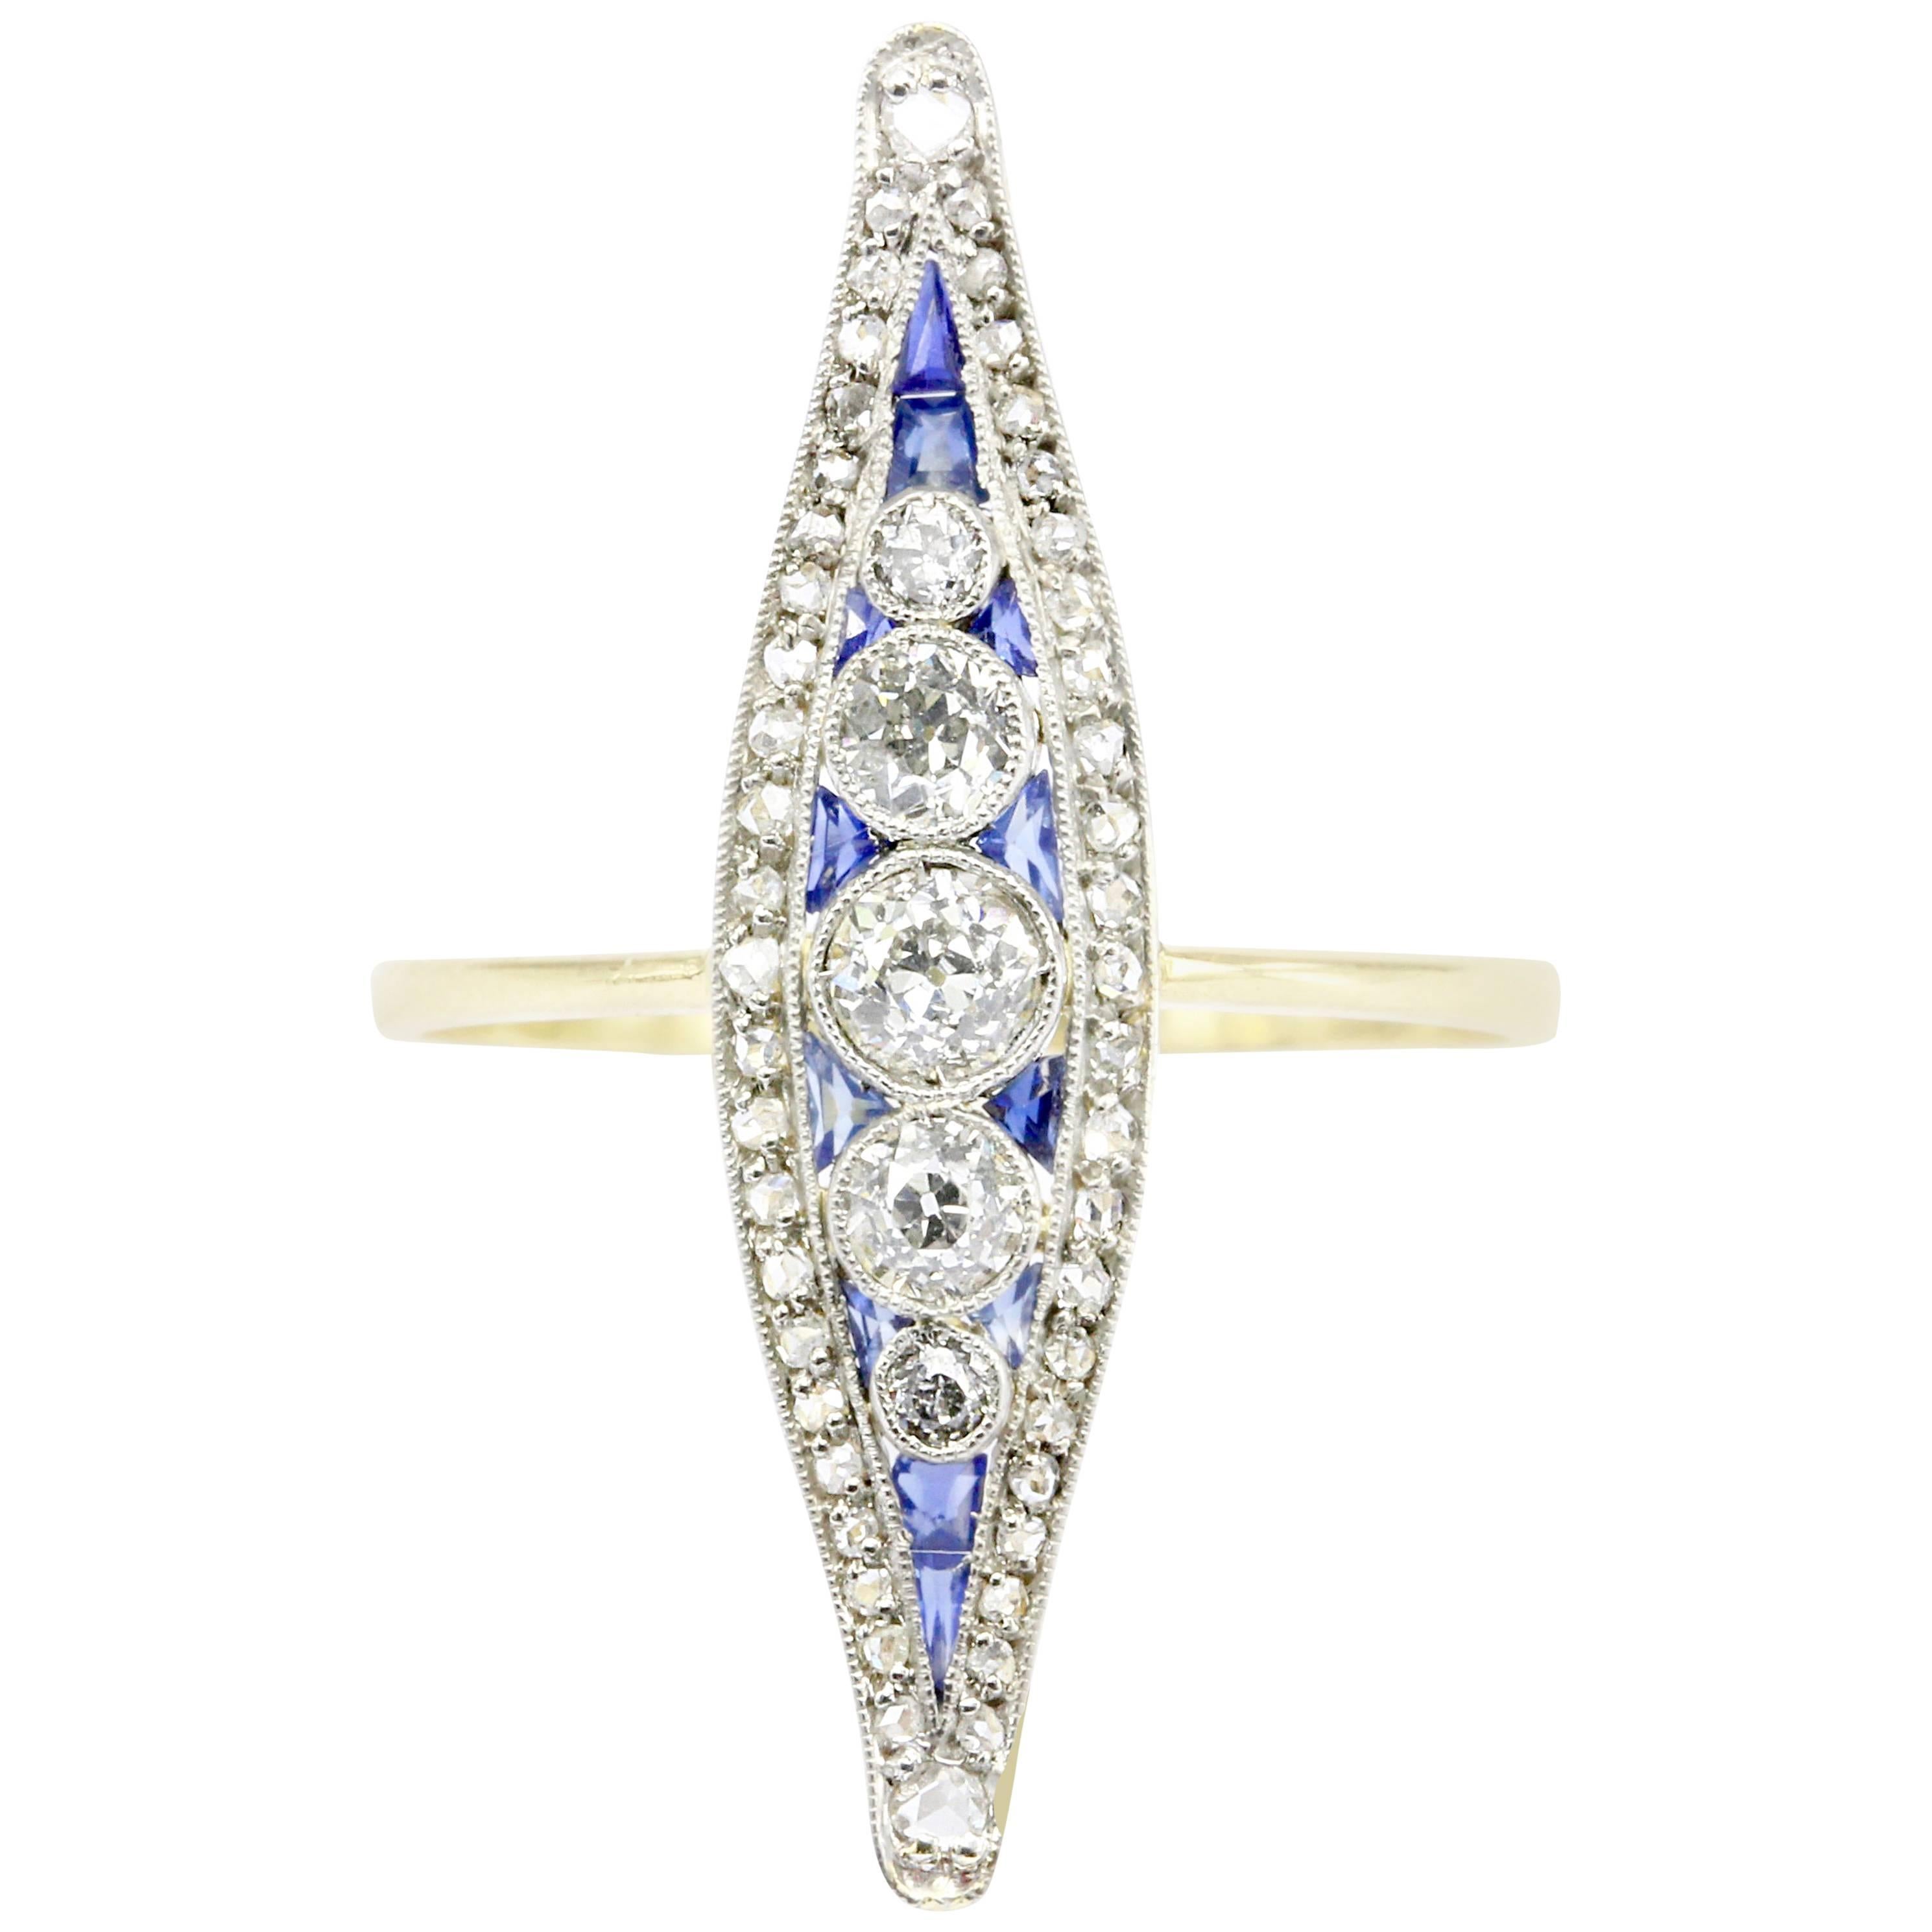 Edwardian Diamond and Sapphire Navette Ring, circa 1900s